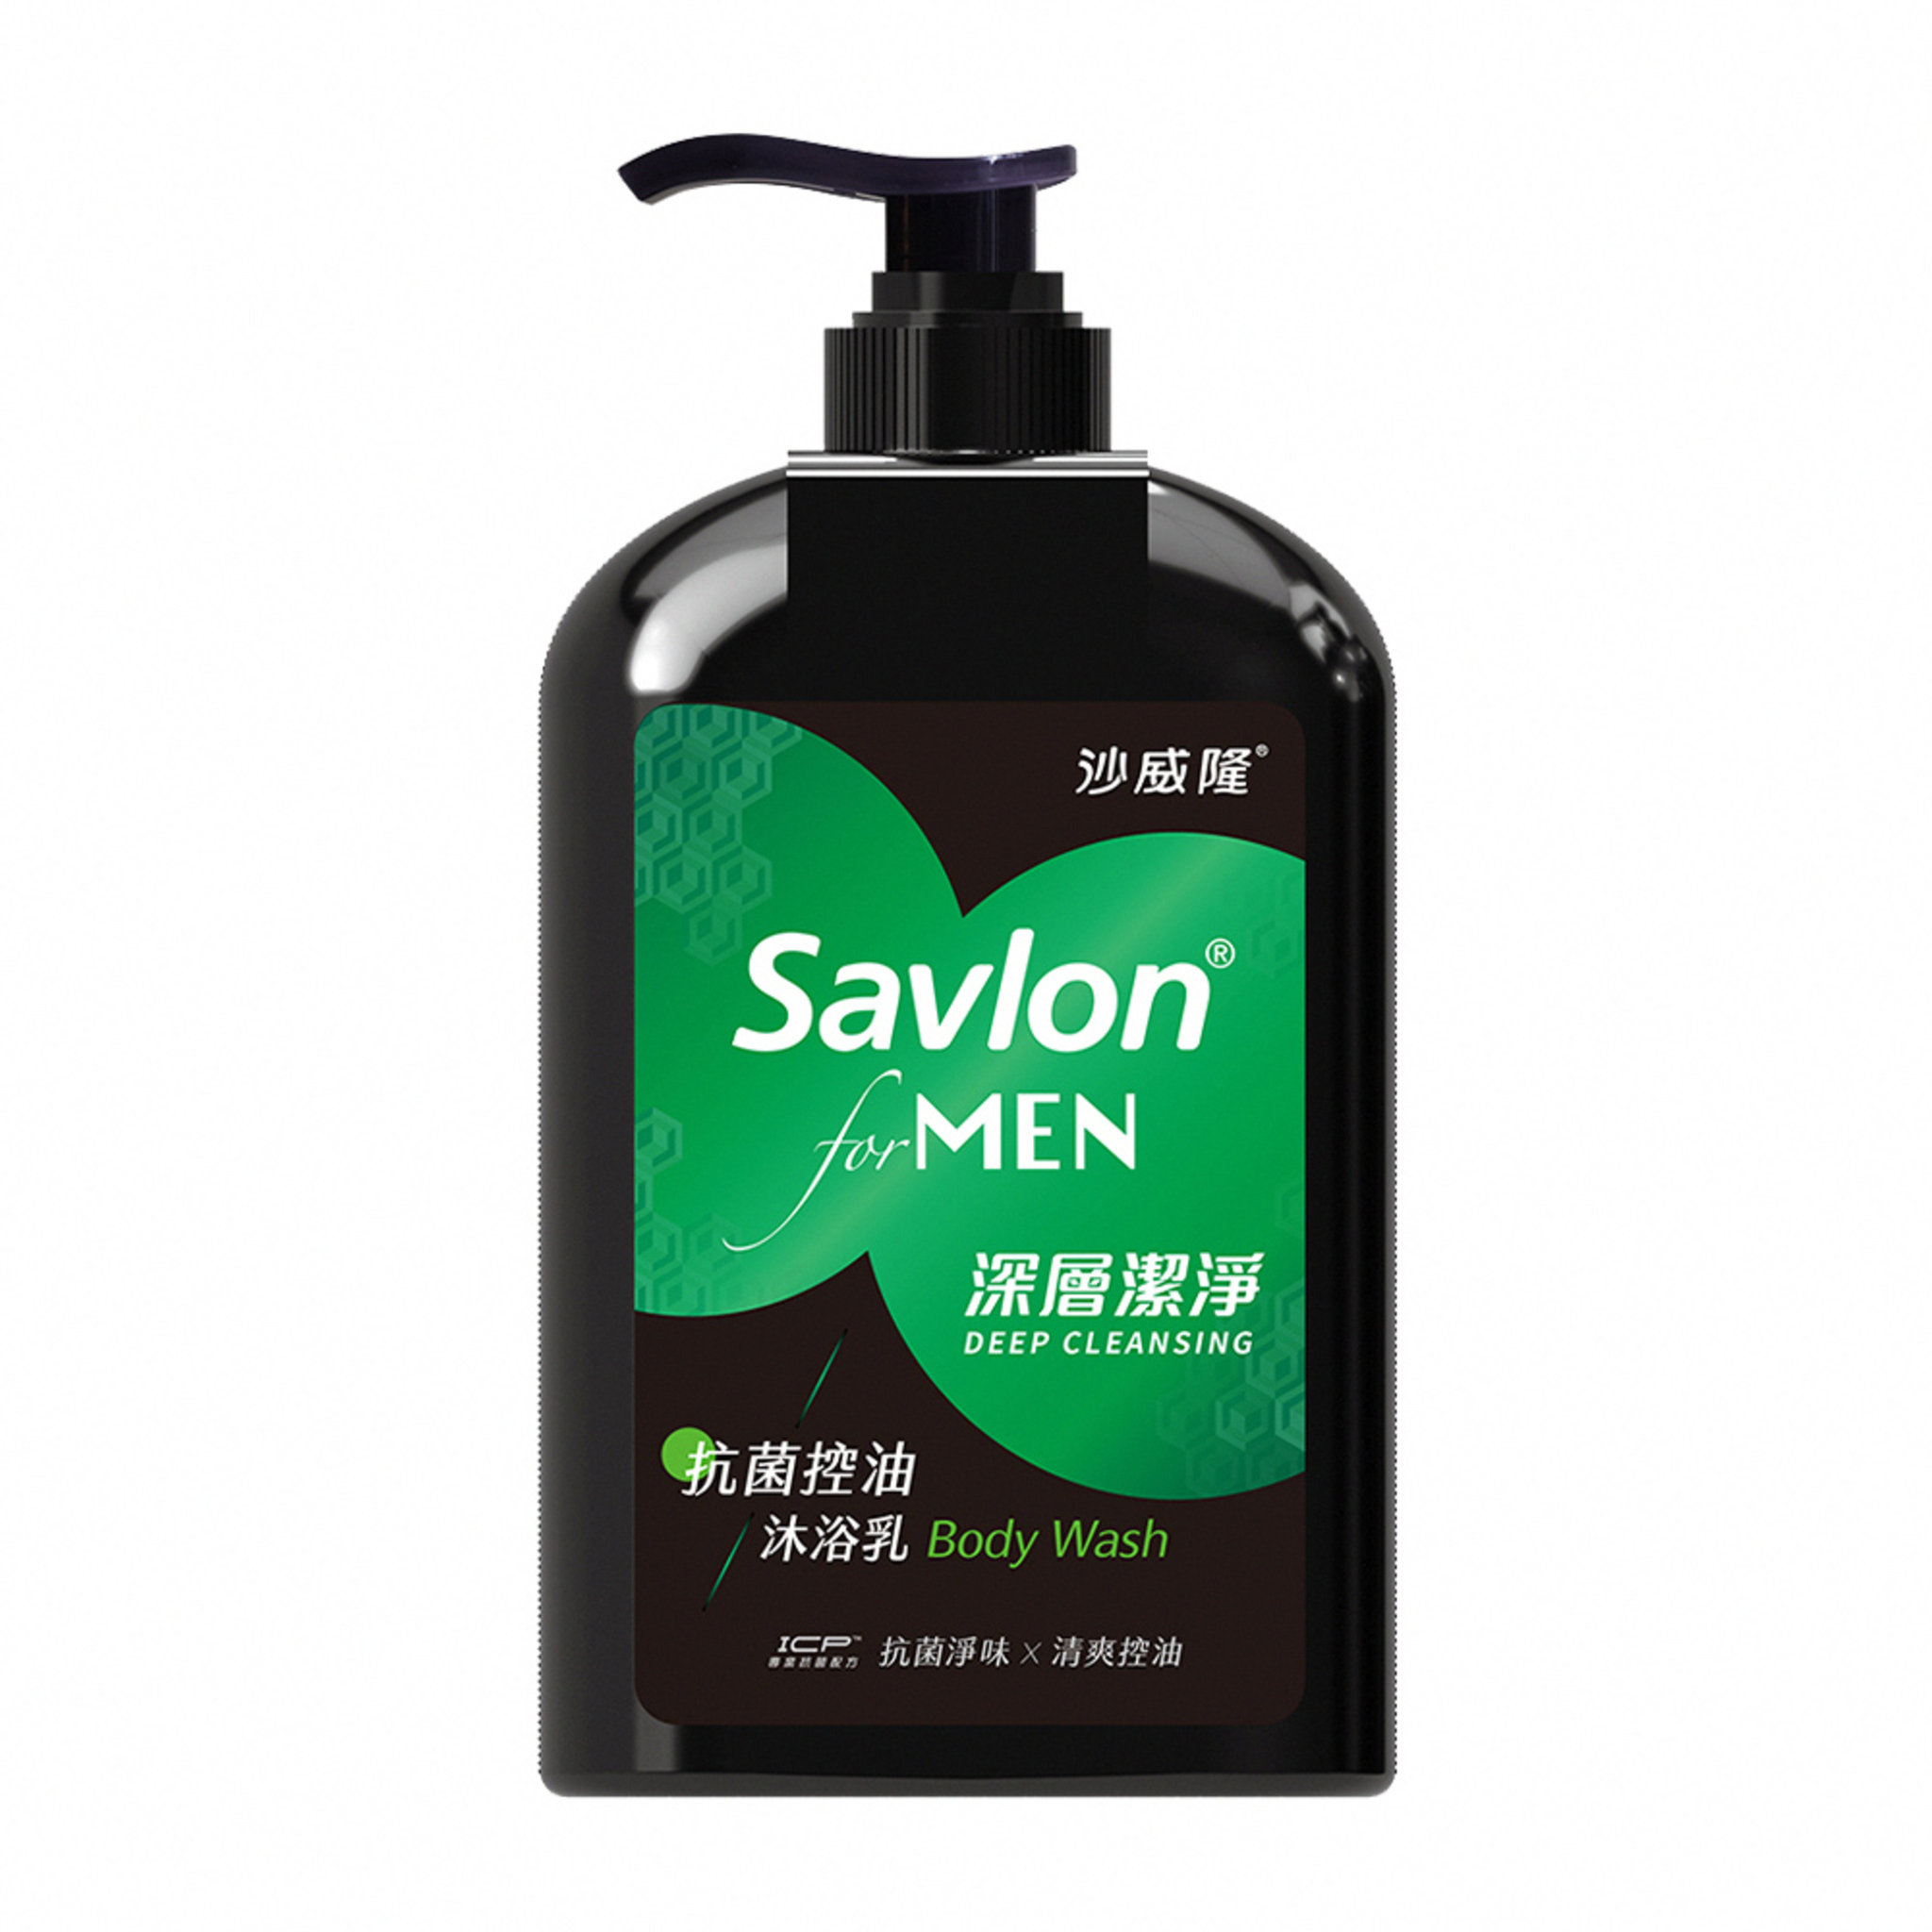 【Savlon沙威隆】男性抗菌沐浴乳670ml -深層潔淨